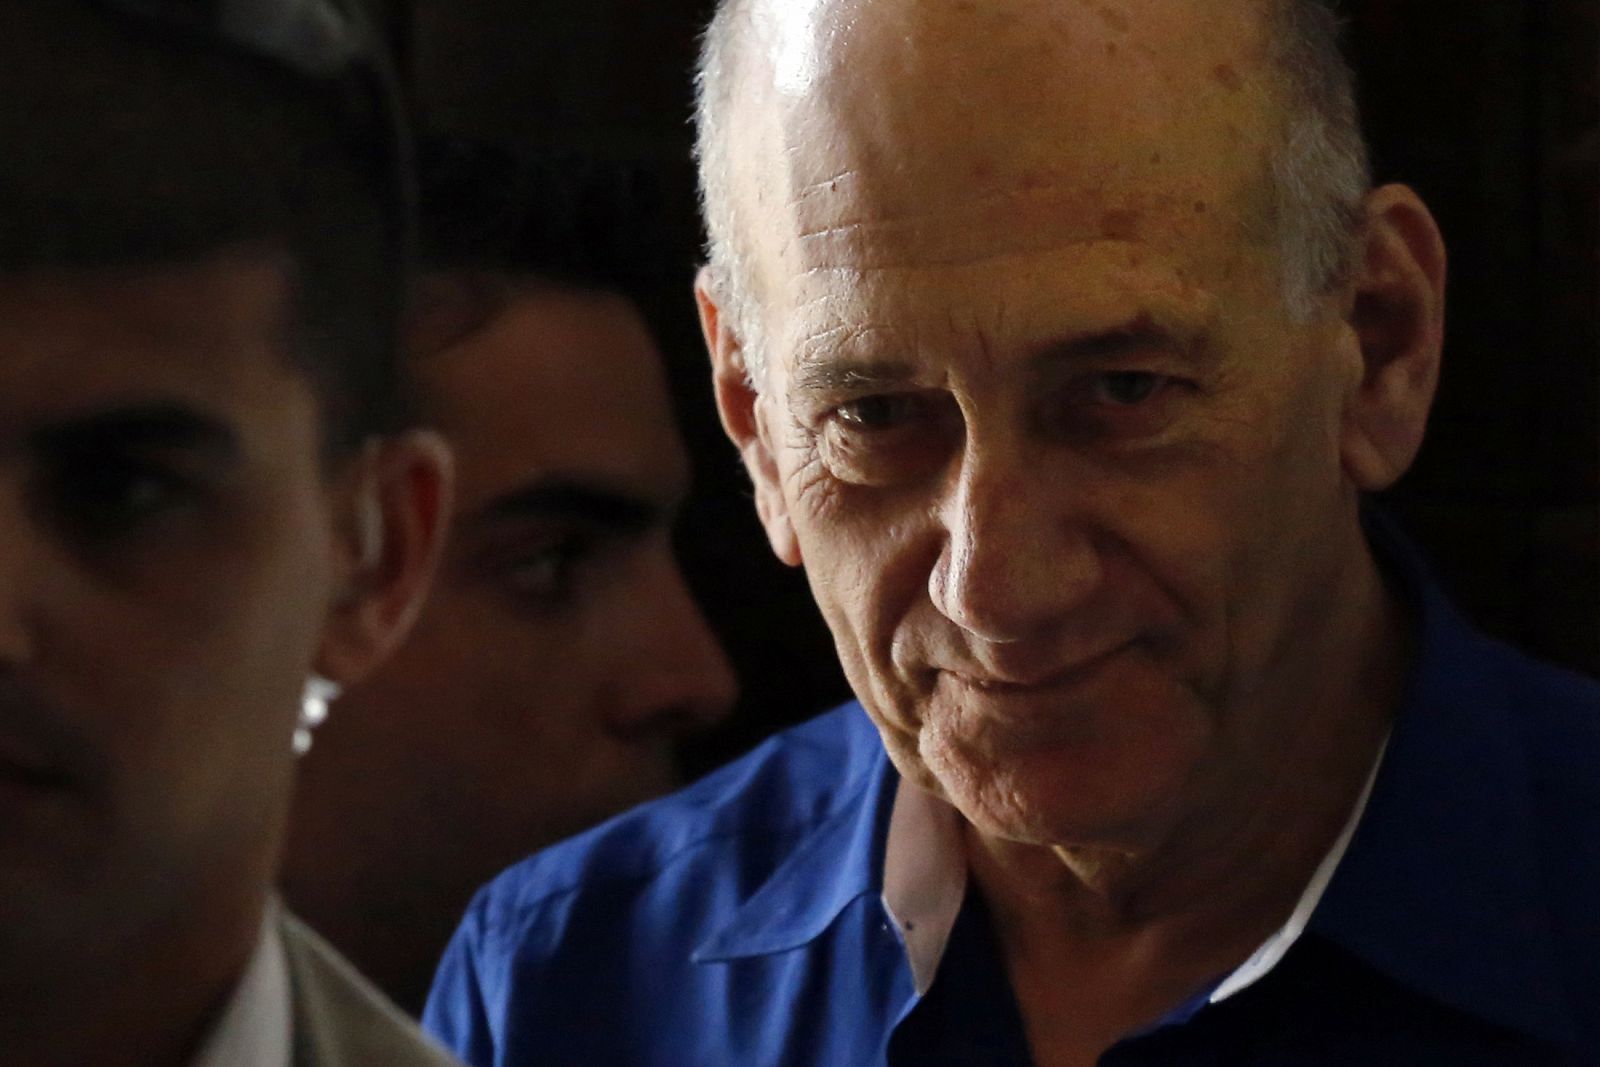 El ex primer ministro israelí, Ehud Olmert, abandona al tribunal tras ser sentenciado a pena de cárcel